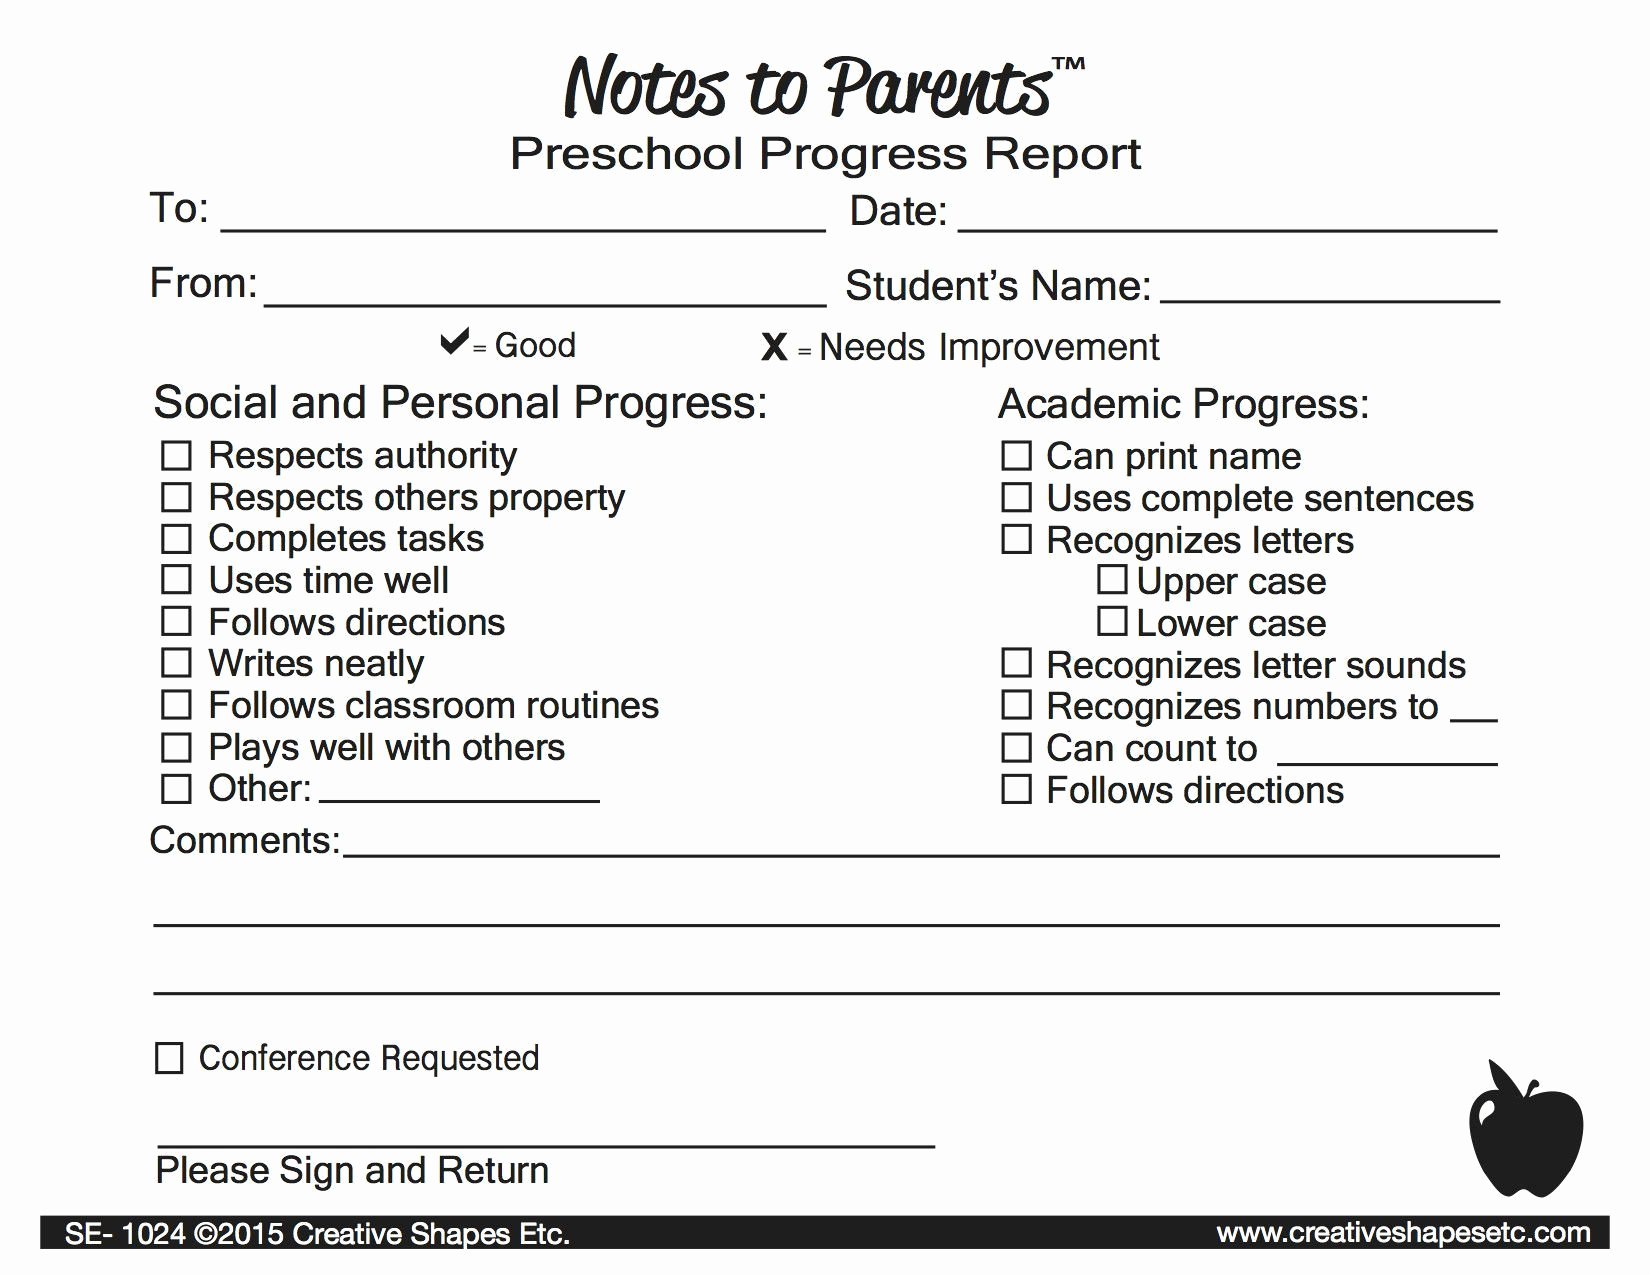 Preschool Progress Report Template Awesome Notes to Parents™ Preschool Progress Report